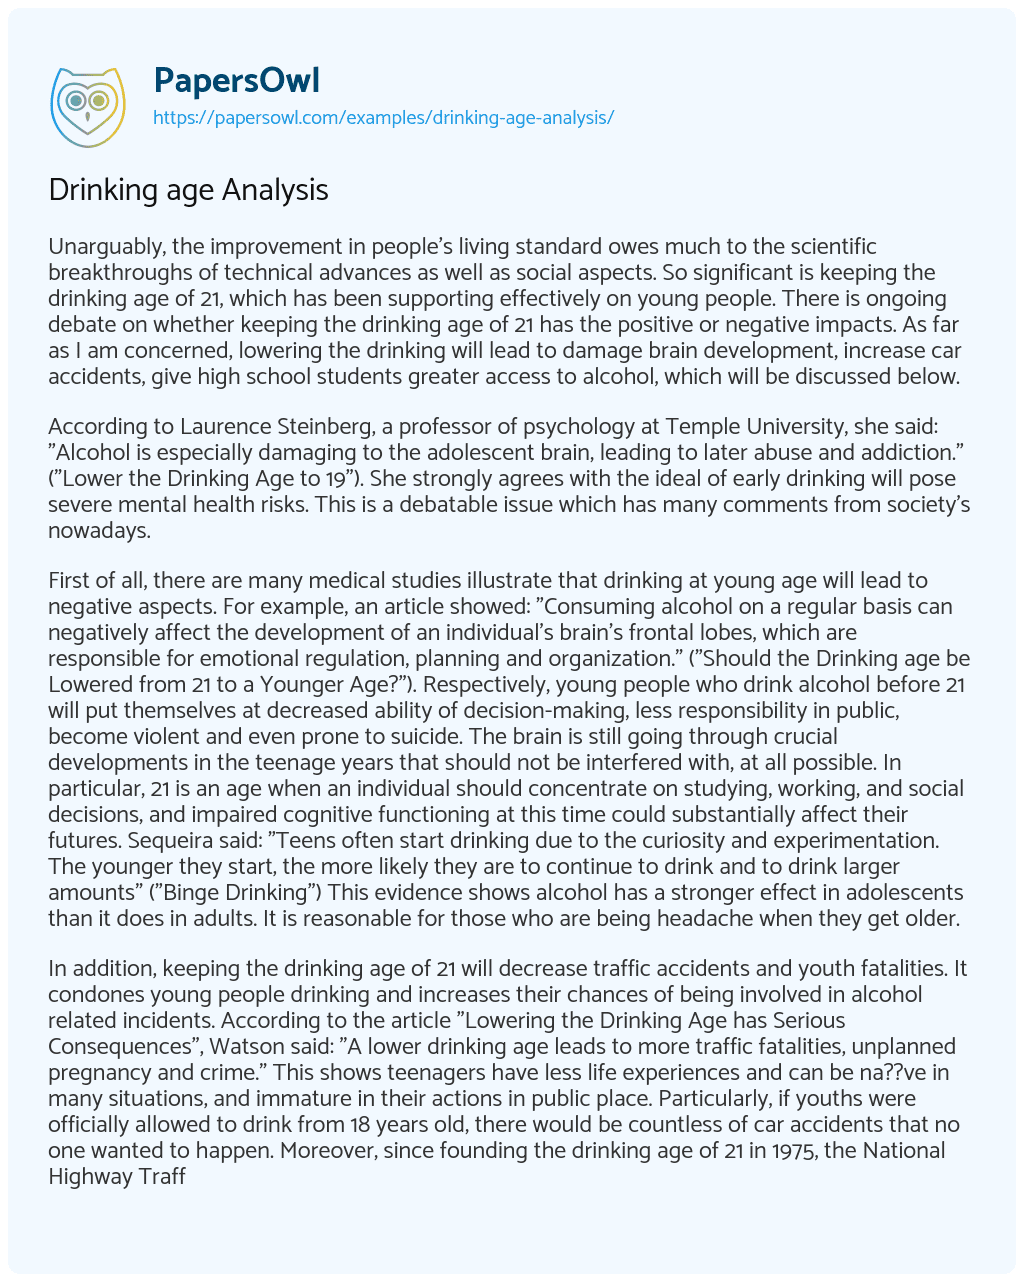 Essay on Drinking Age Analysis